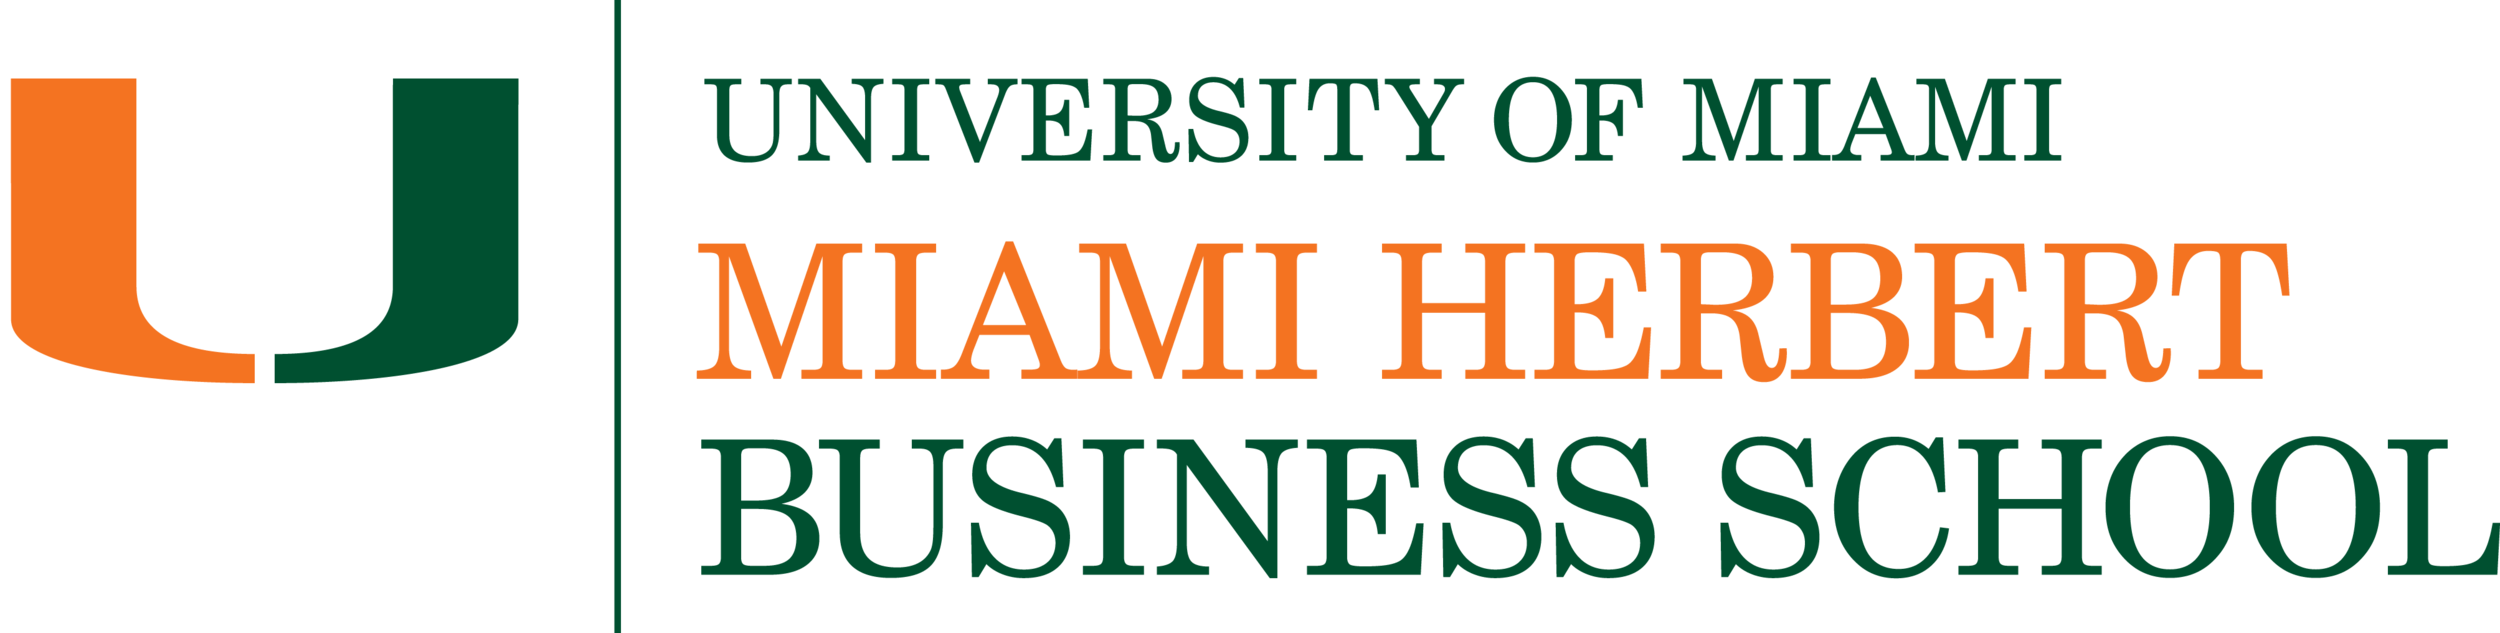 University-of-miami-patti-and-allan-herbert-business-school-logo.png